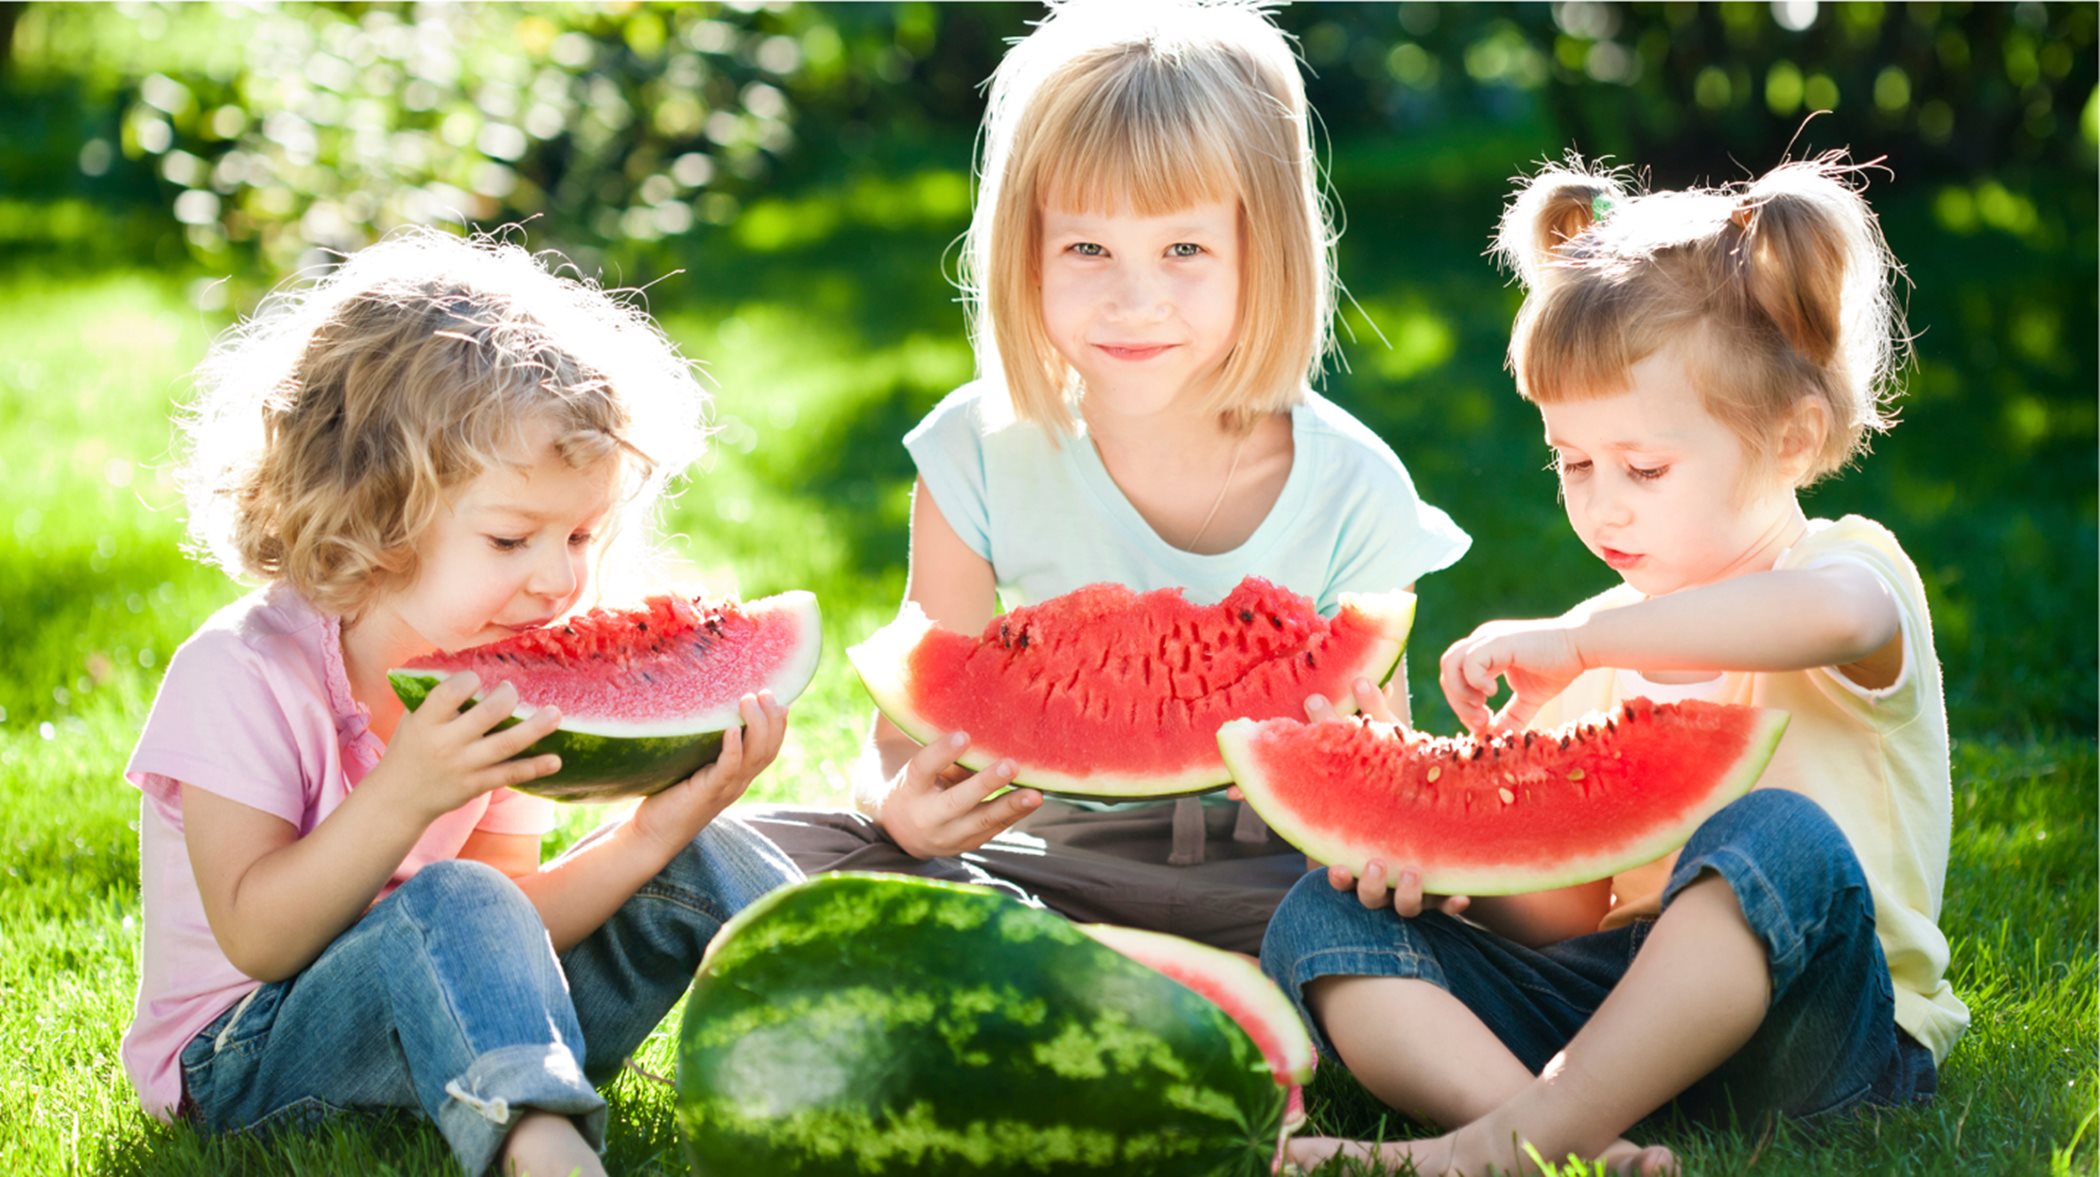 Three girls eating watermelon